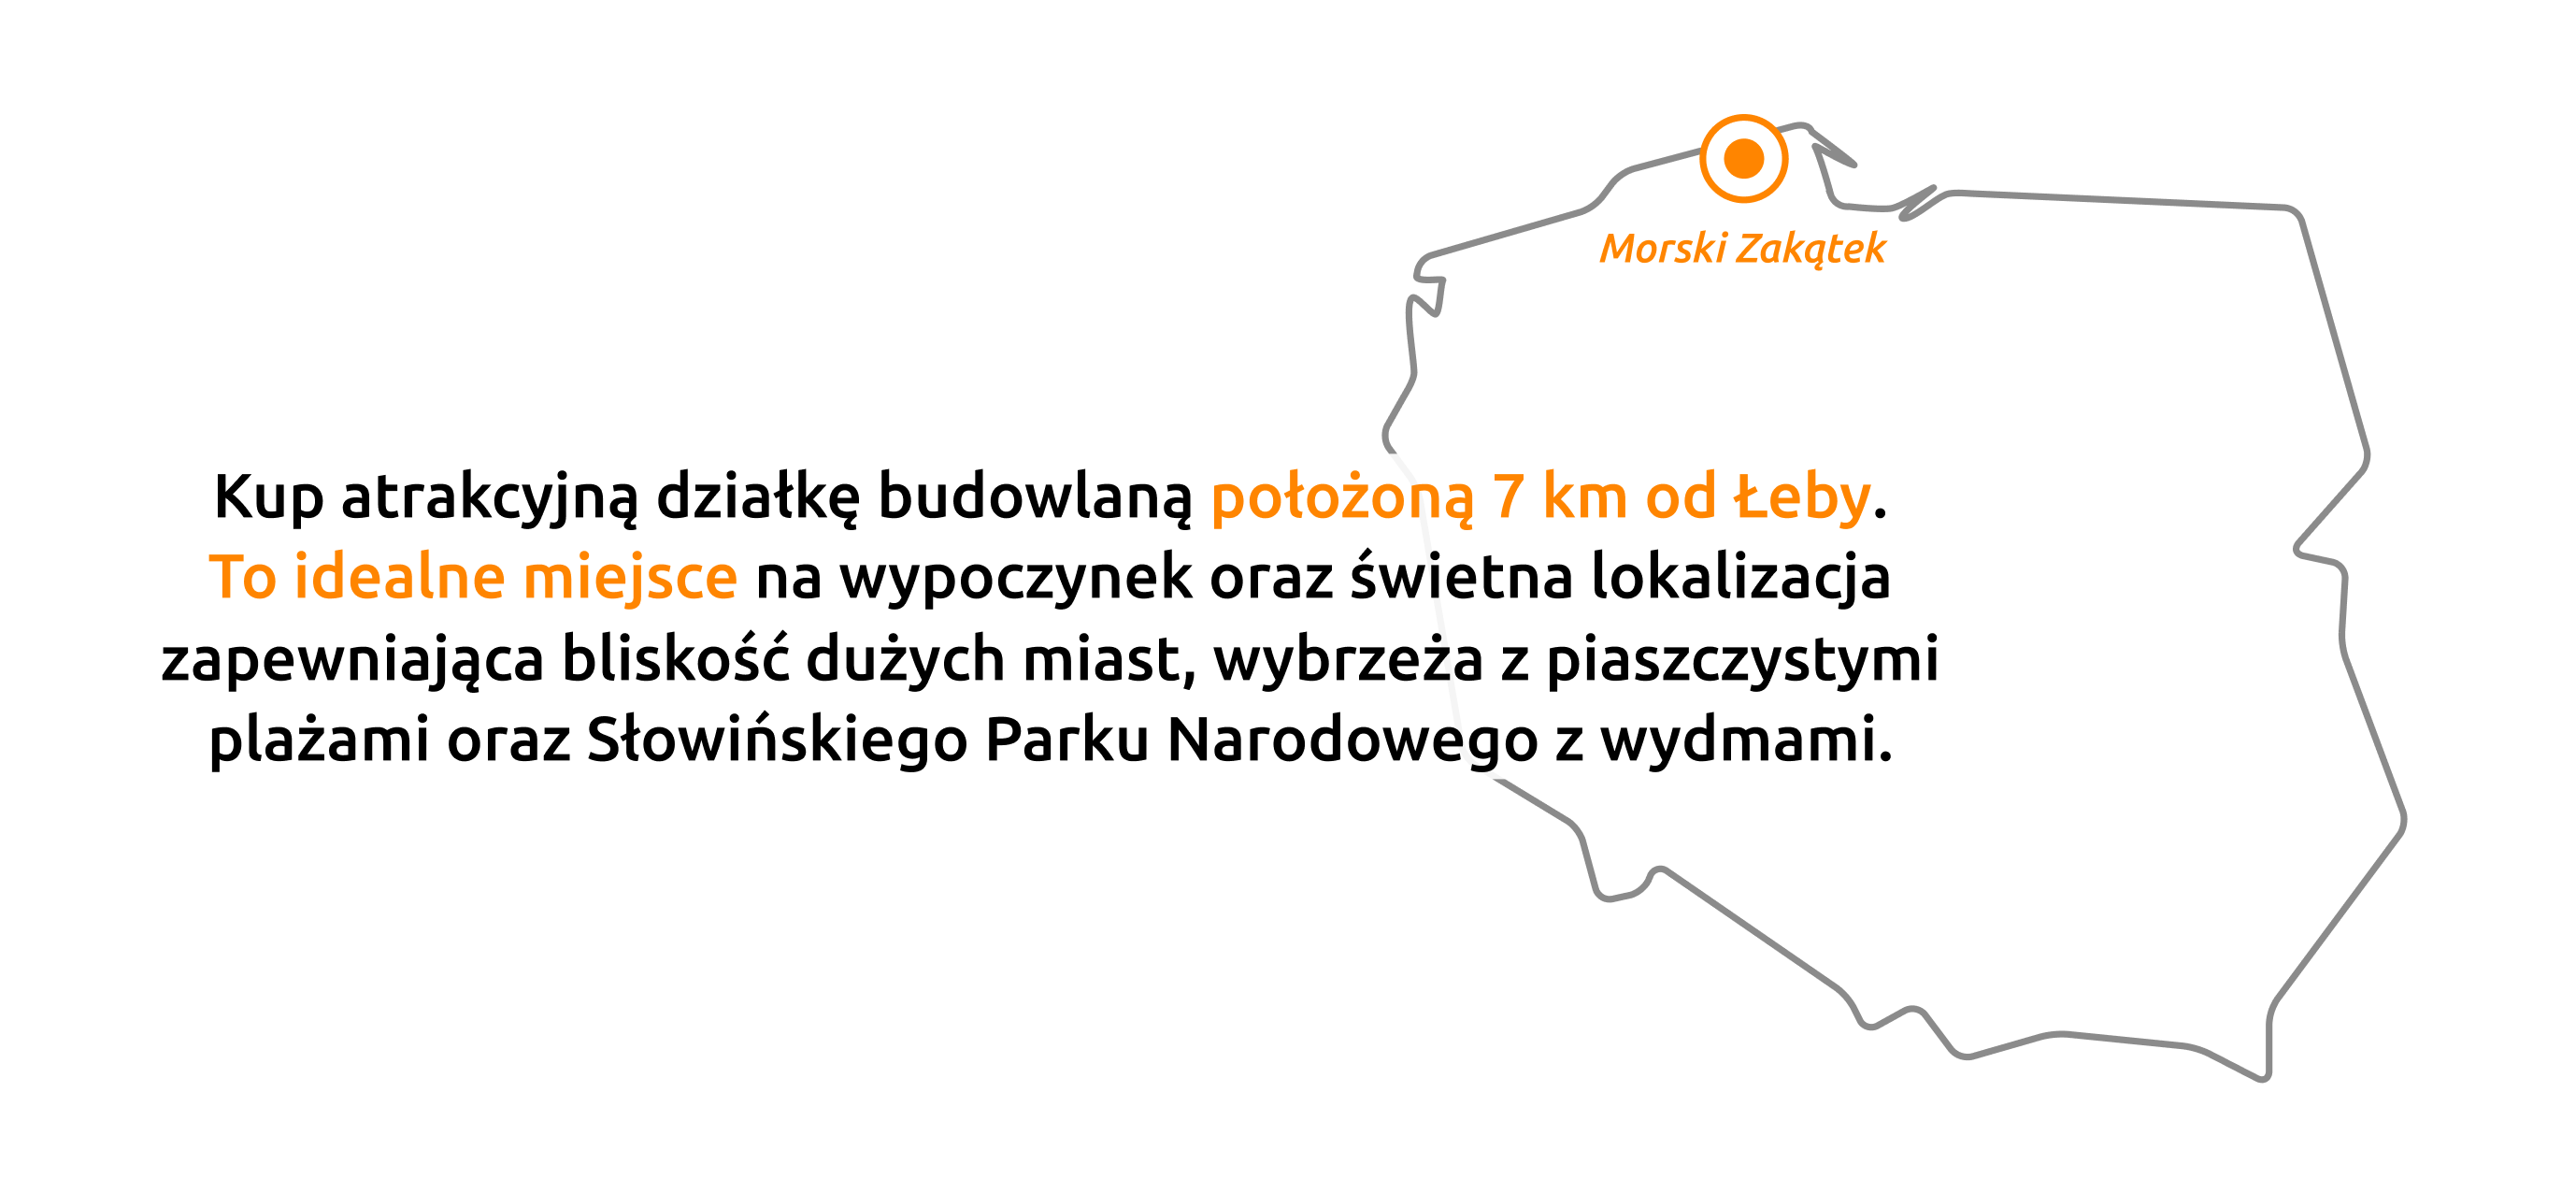 mapa Polski oraz tekst